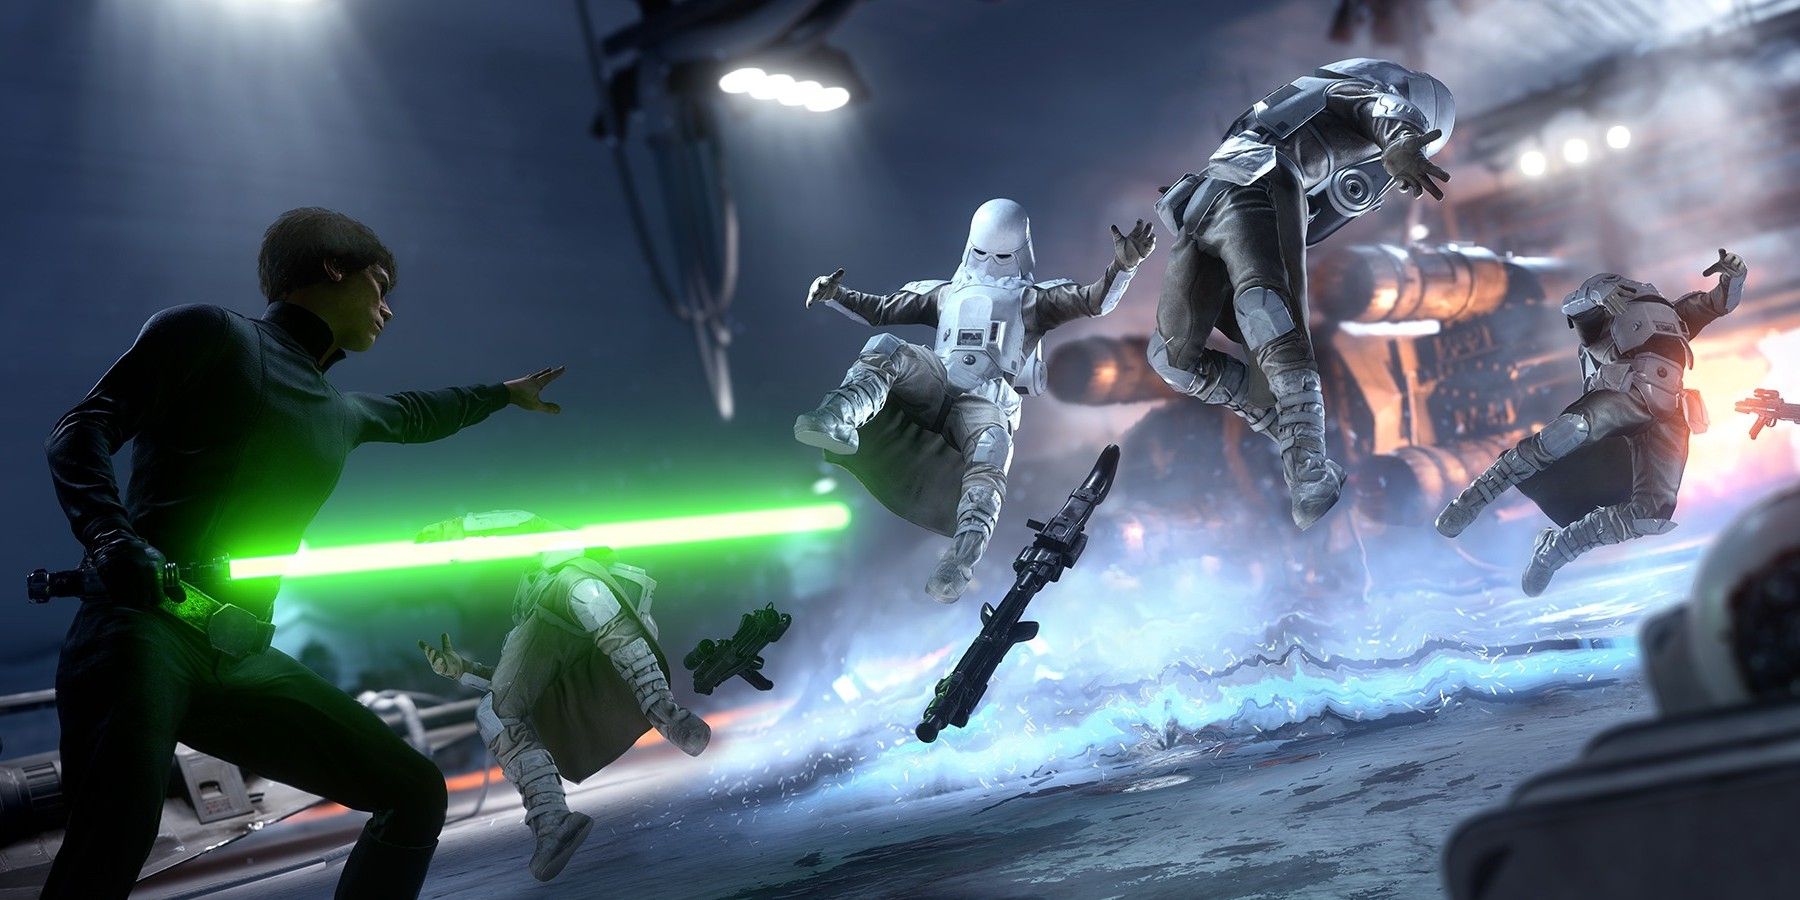 Luke Skywalker Force Pushing Snowtroopers In Star Wars Battlefront 2